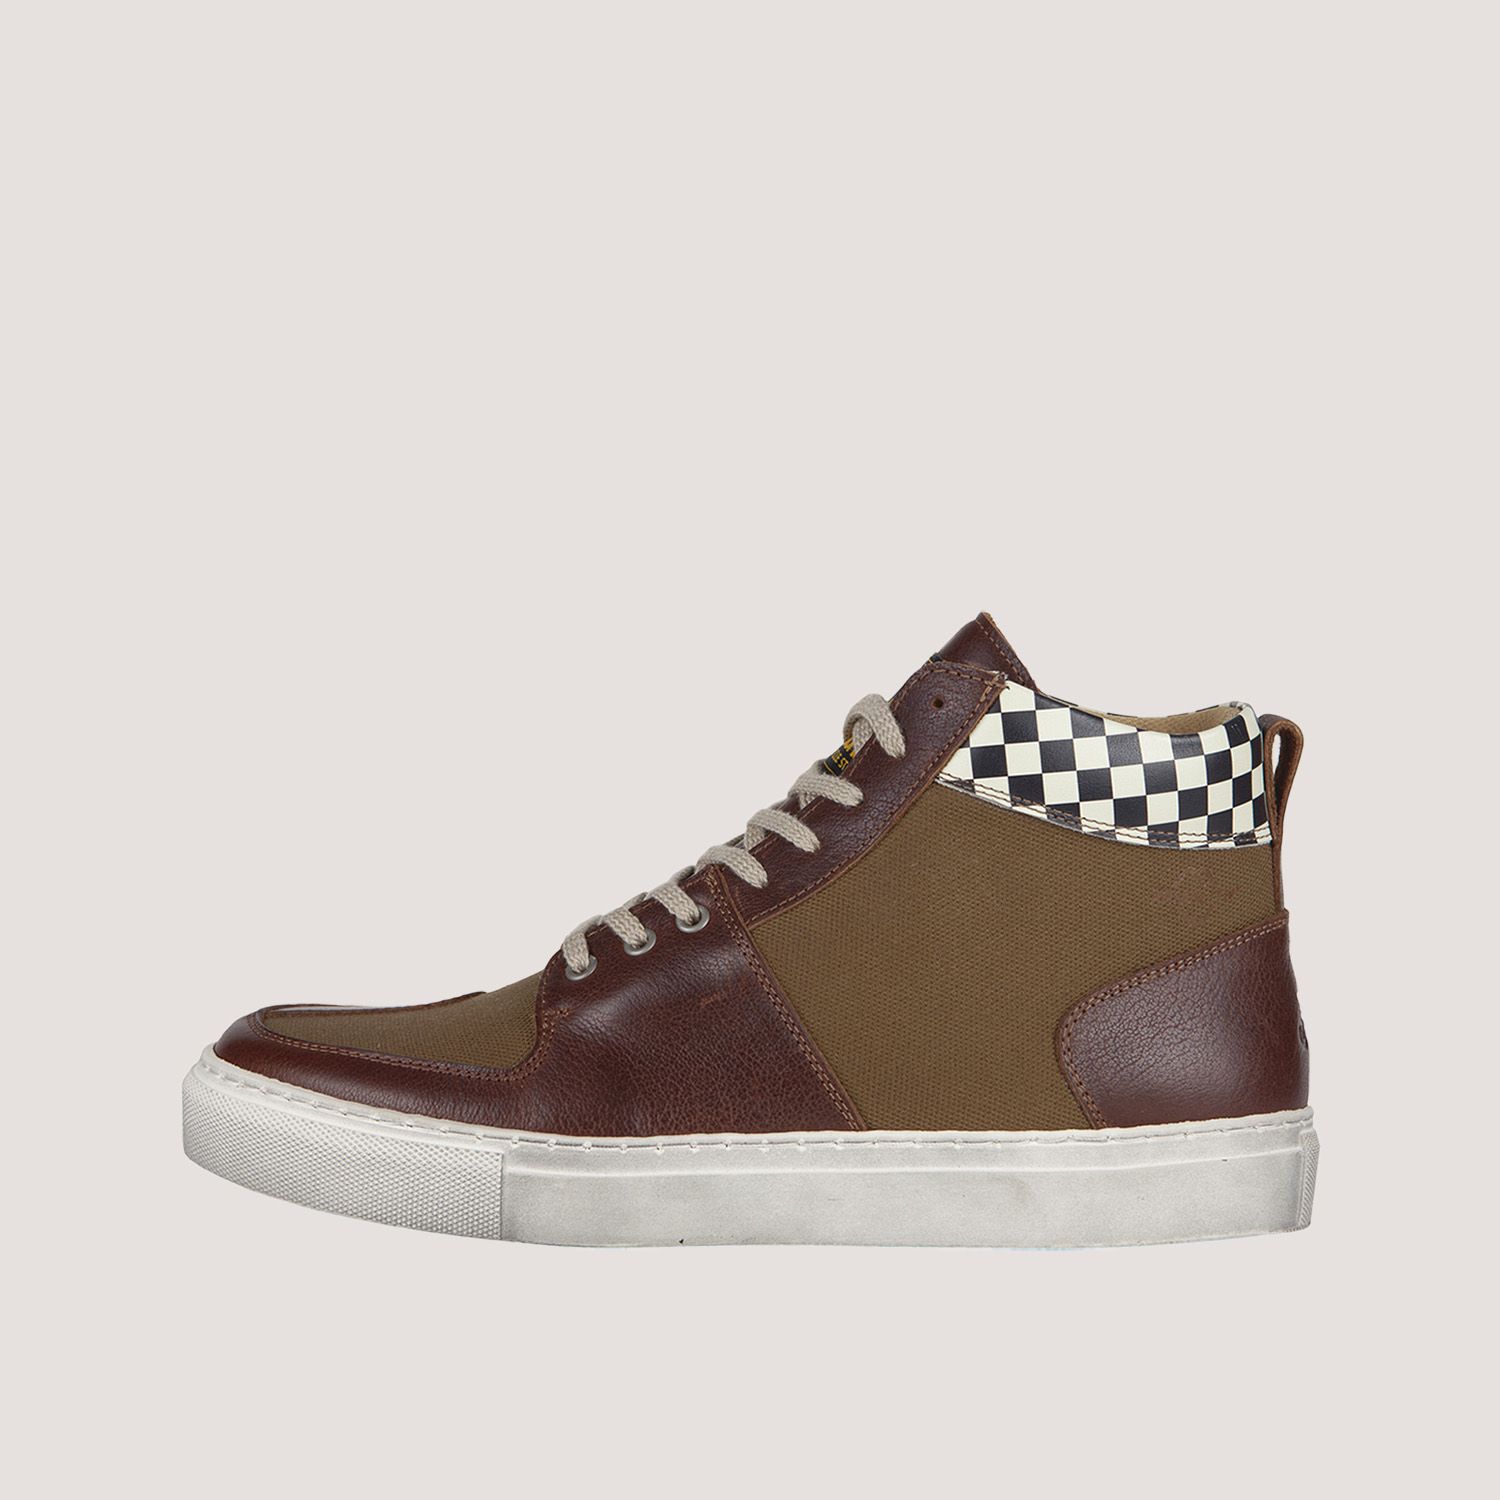 Image of Helstons Grandprix Leather Armalith Tan Khaki Shoes Size 39 ID 3662136097674